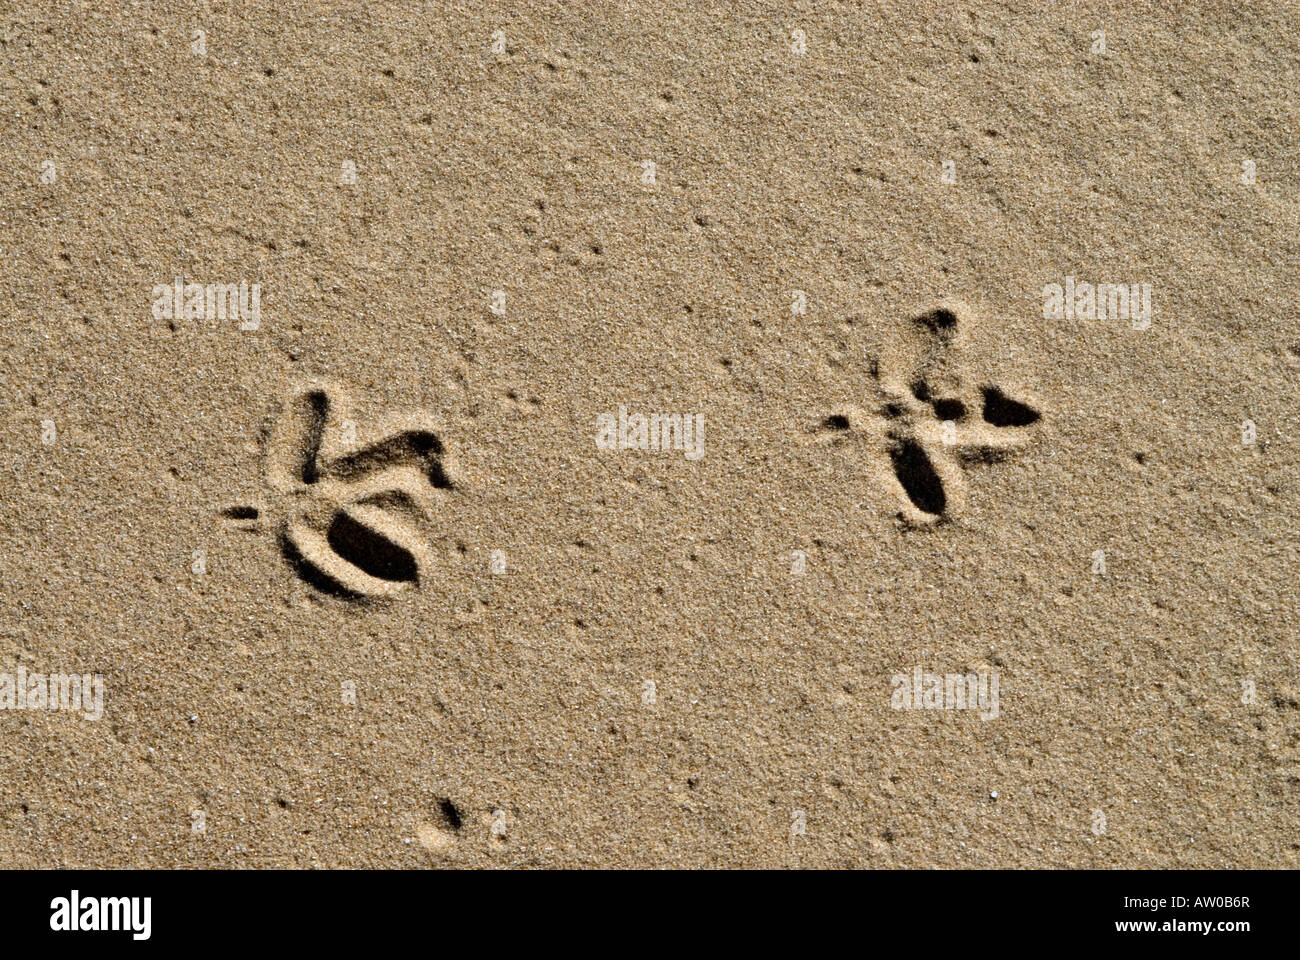 Bird prints in sand Stock Photo